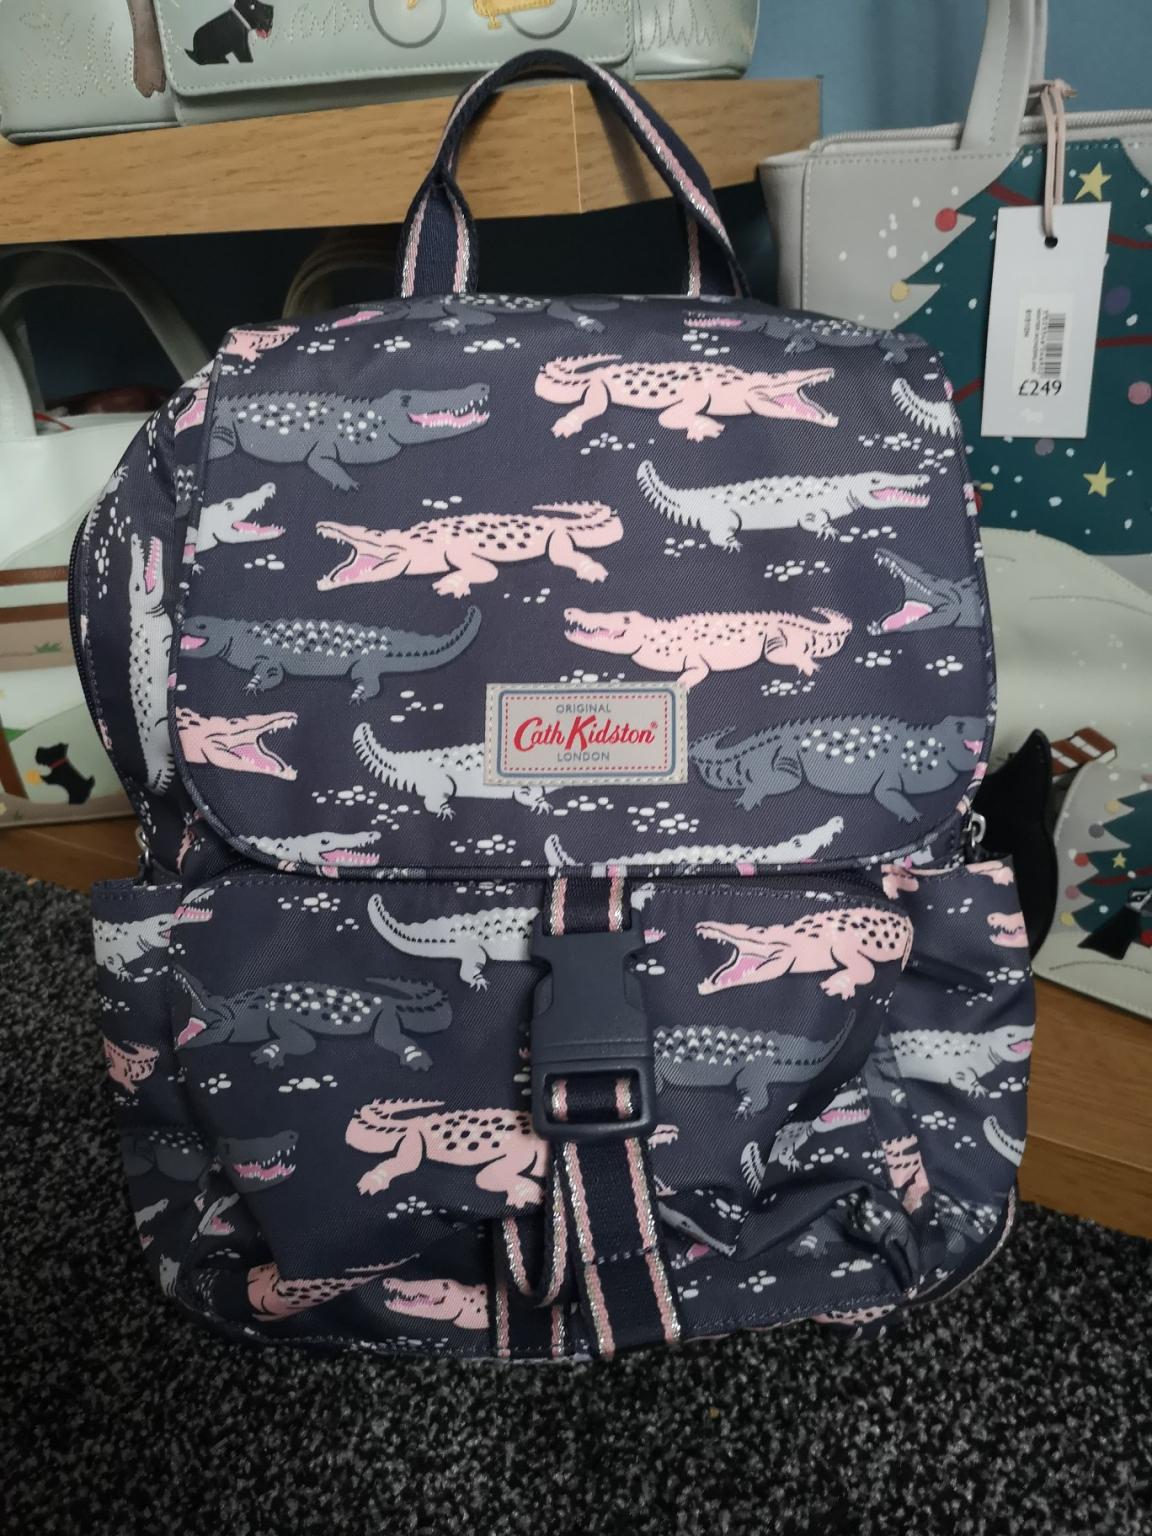 cath kidston crocodile backpack